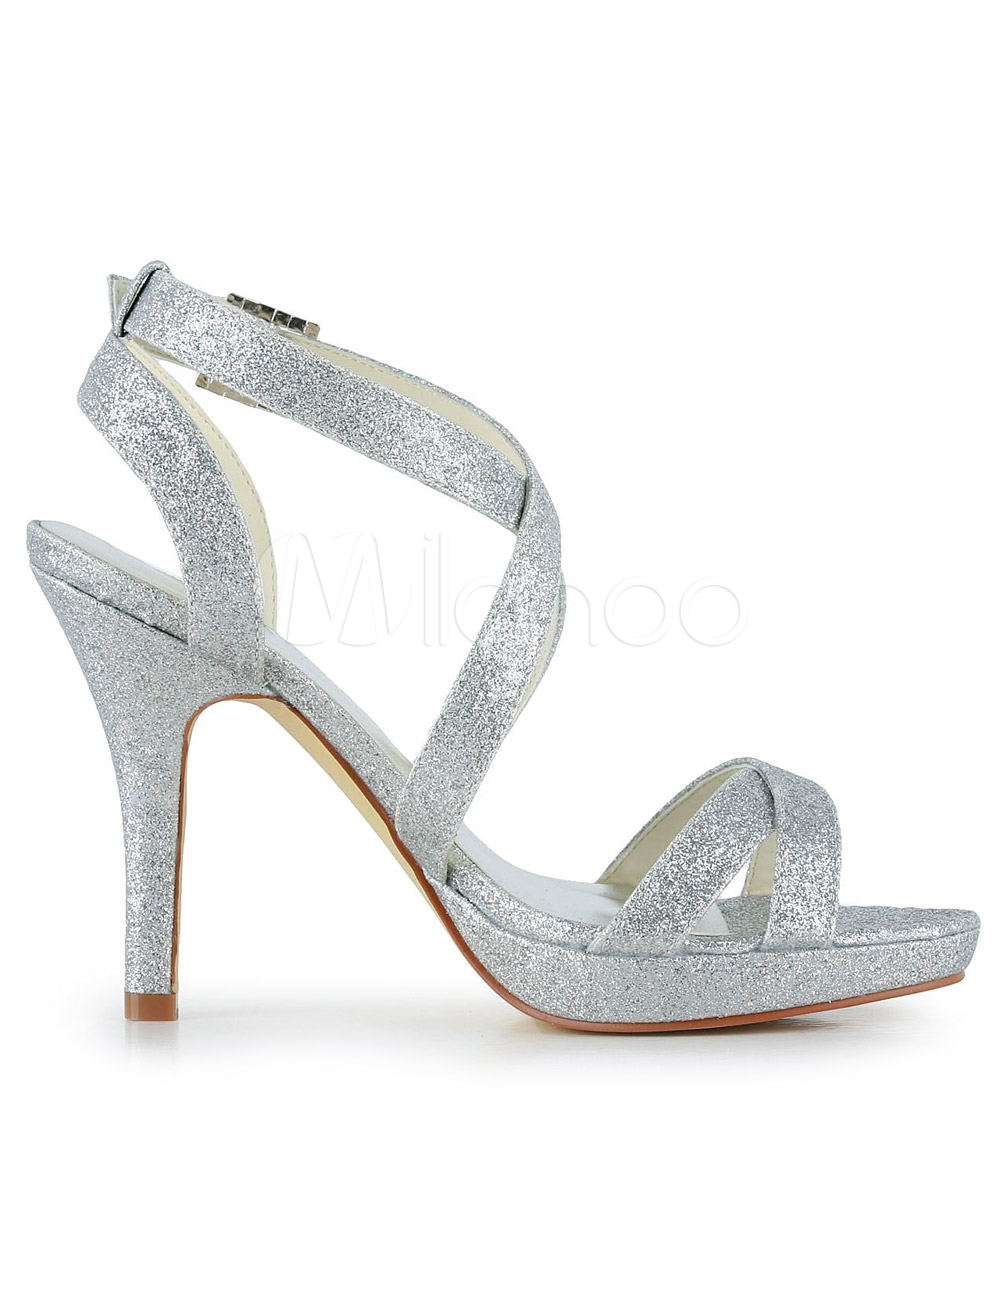 Silver Silk And Satin Open Toe Pumps For Bride - Milanoo.com